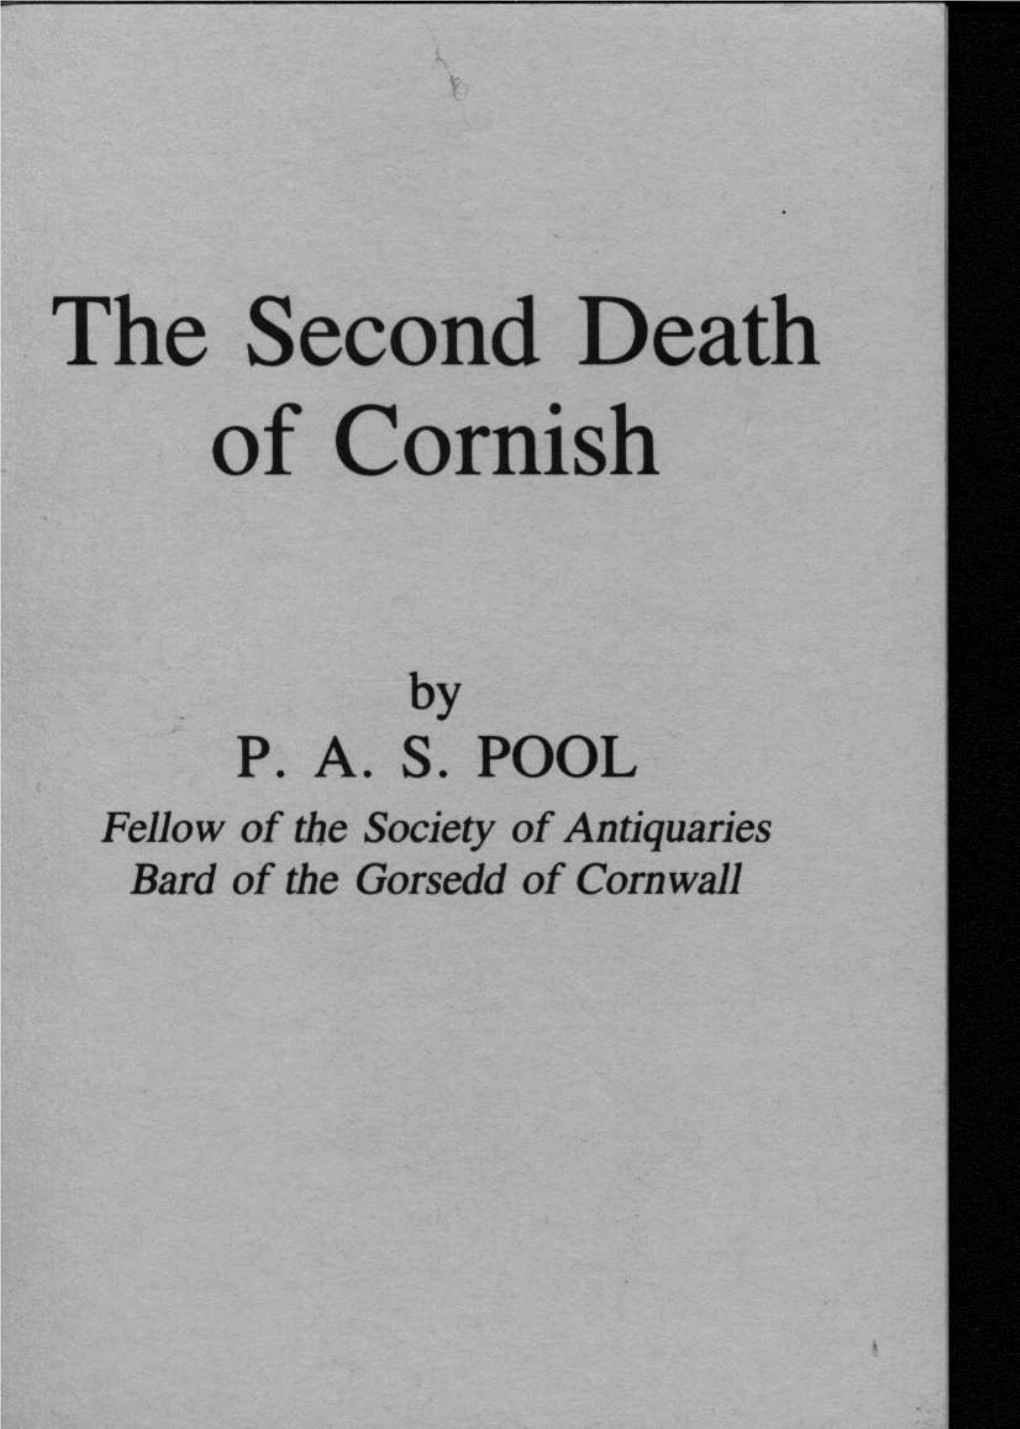 The Second Death of Cornish